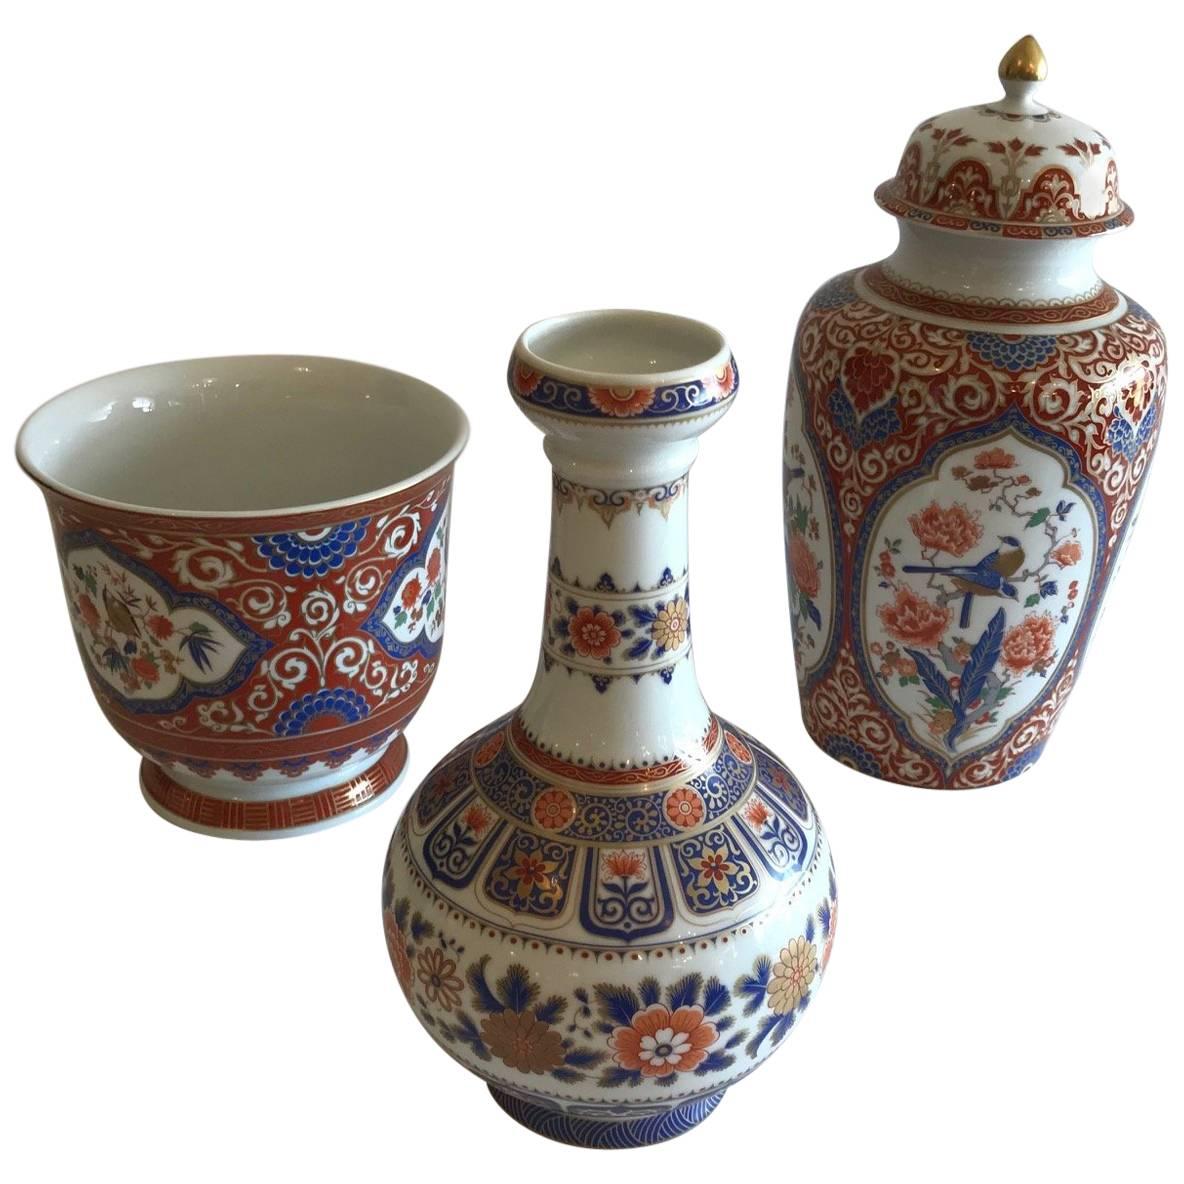 Collection of Three Imari Porcelain Pieces